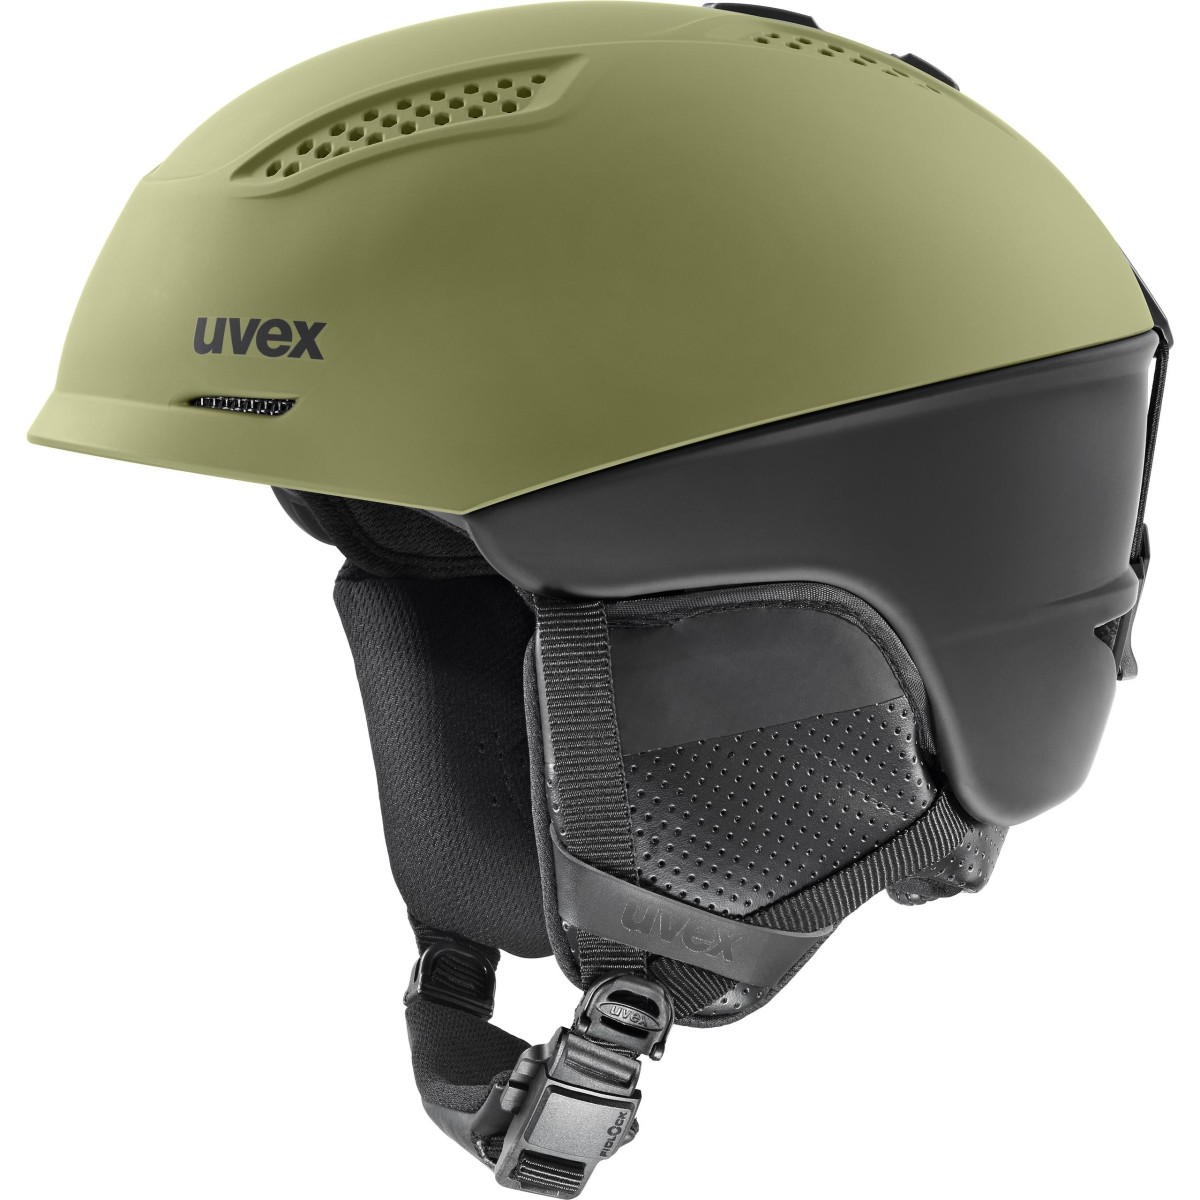 UVEX helmet ULTRA PRO leaf-black mat